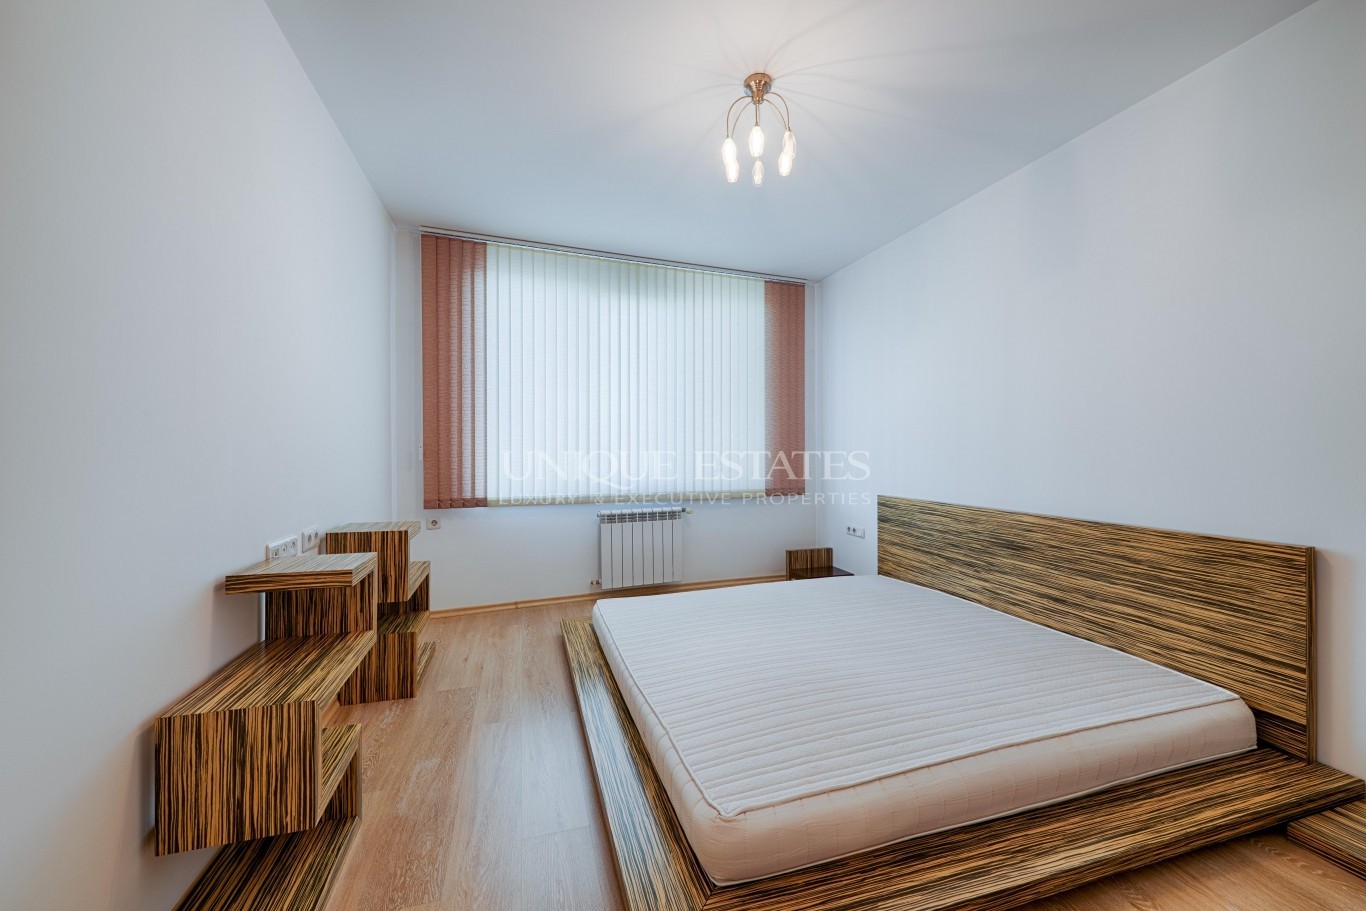 Апартамент под наем в София, Лозенец - код на имота: E17592 - image 3